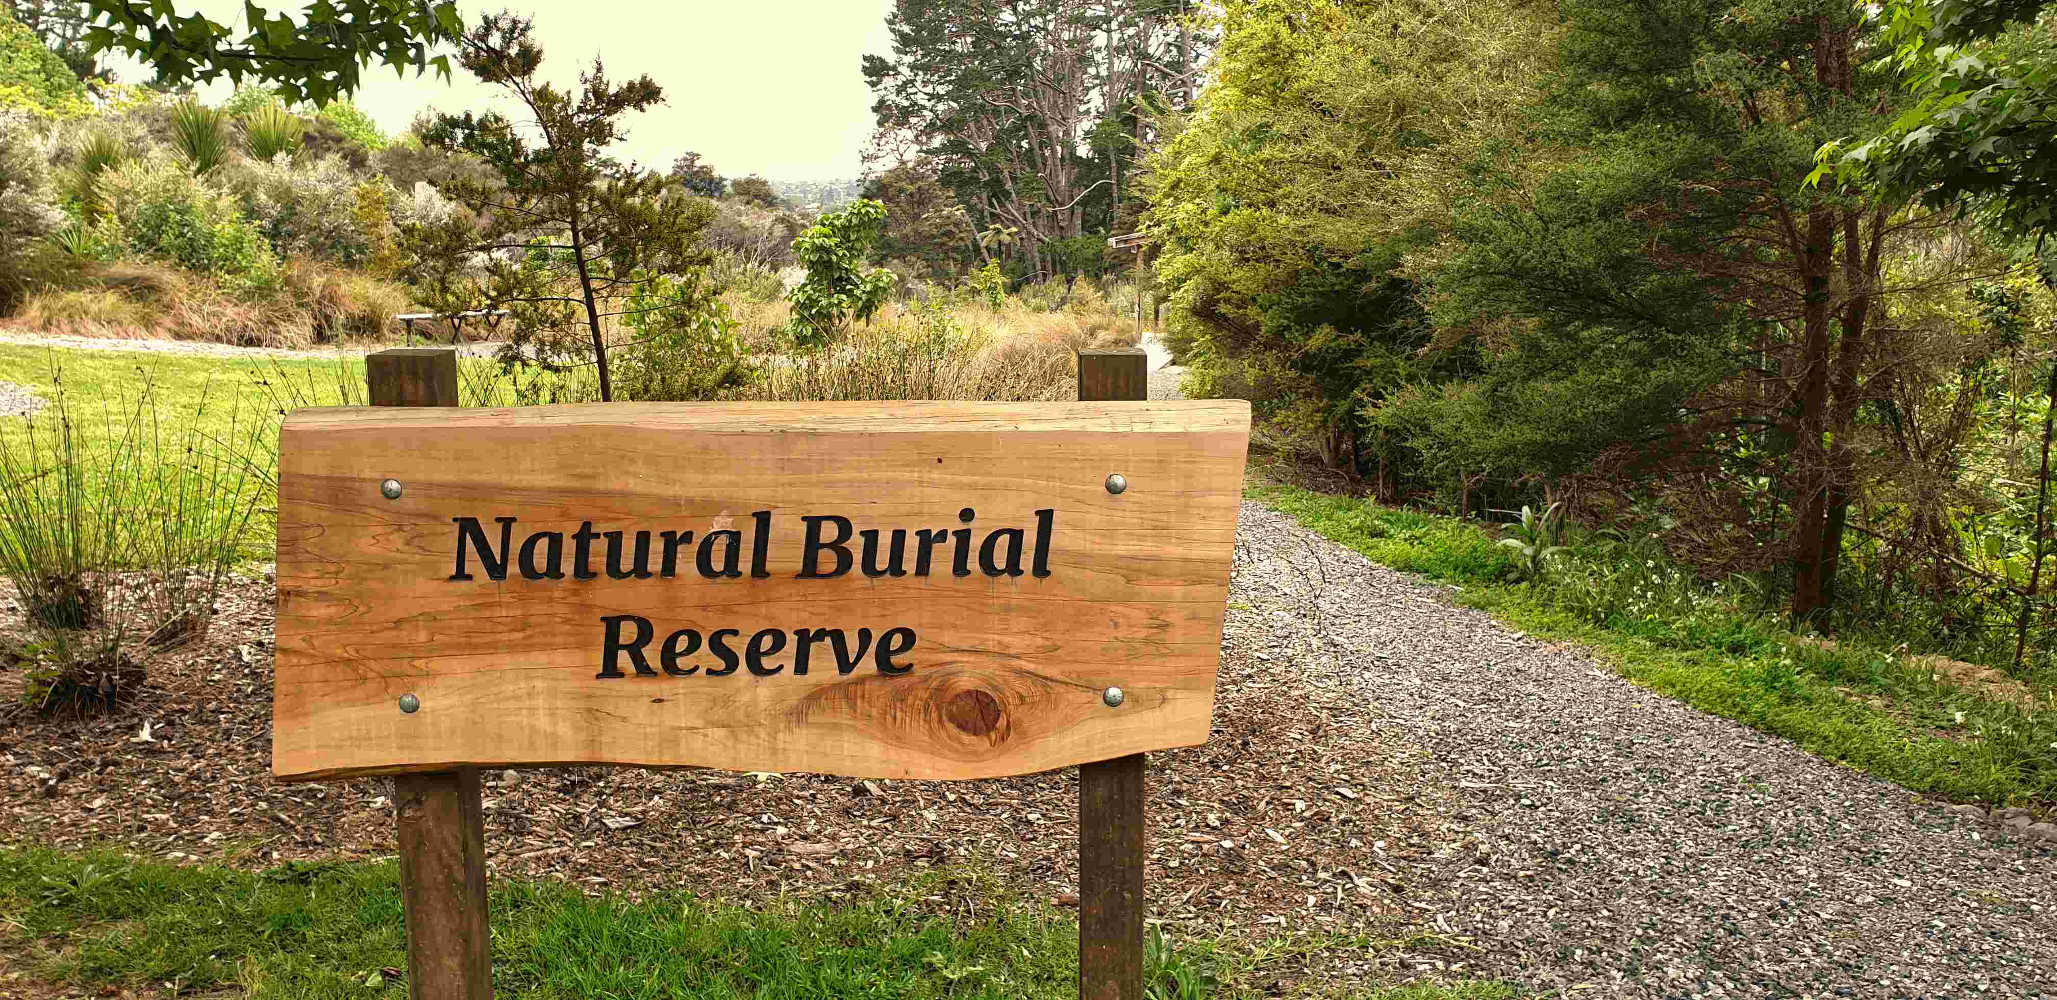 Natural Burial Reserve, Waikumete cemetery, Auckland, New Zealand